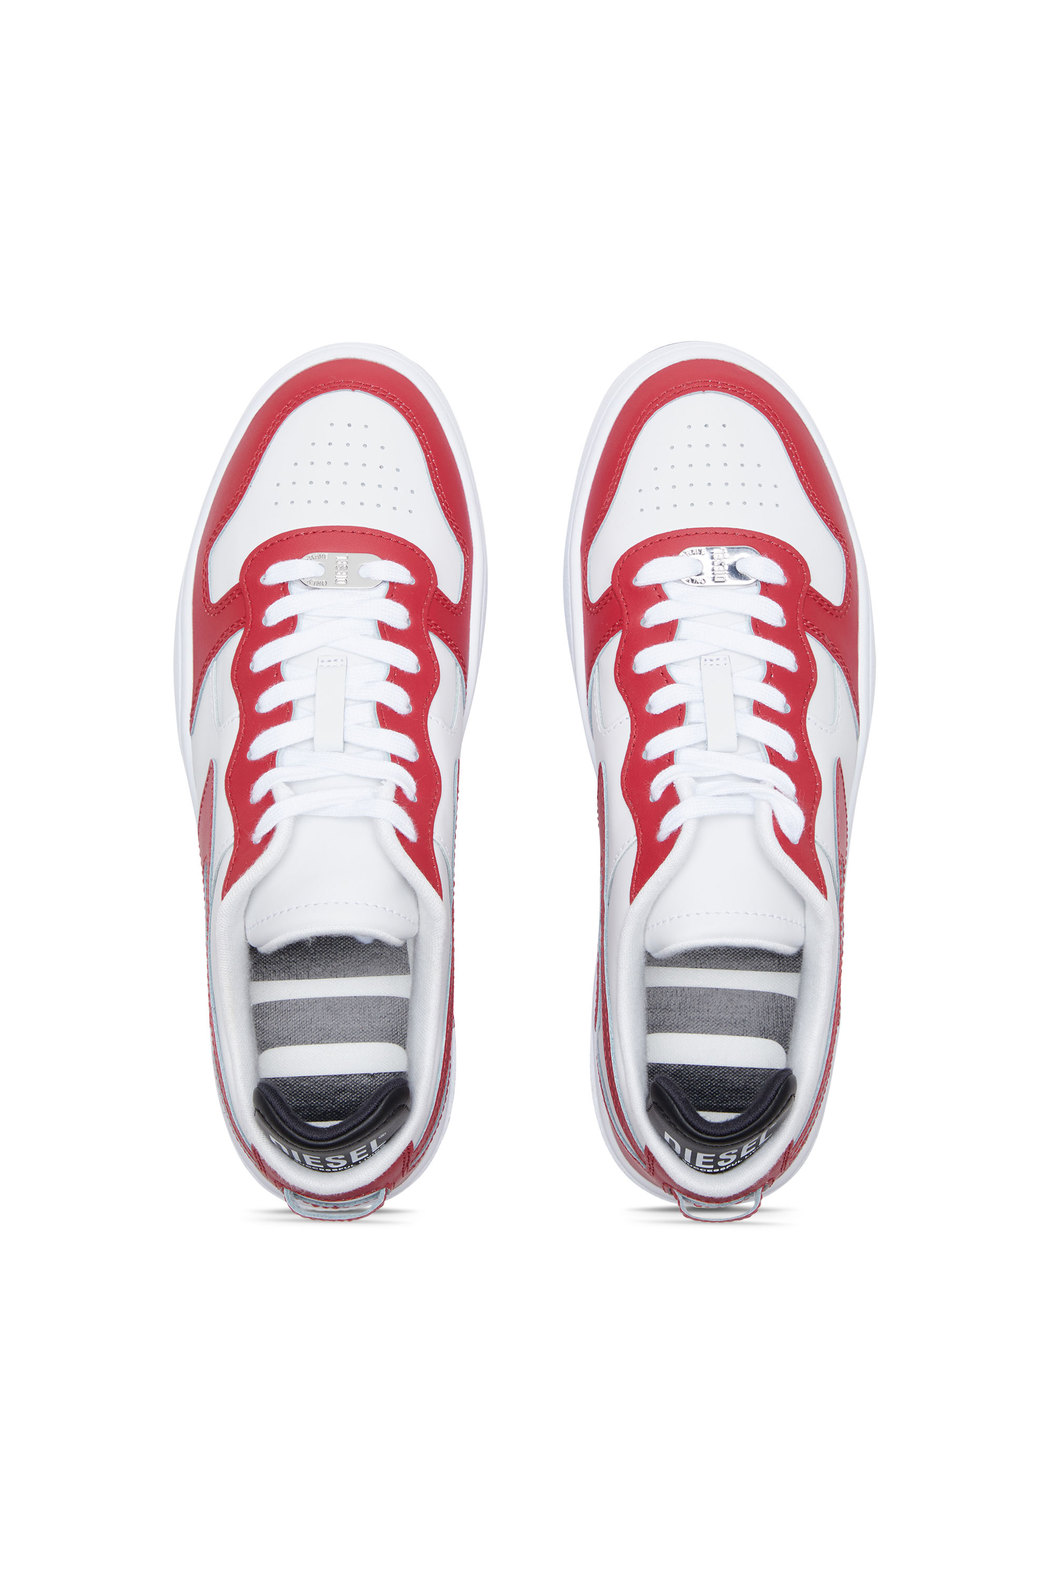 S-Ukiyo Low - Sneakers with contrast overlays